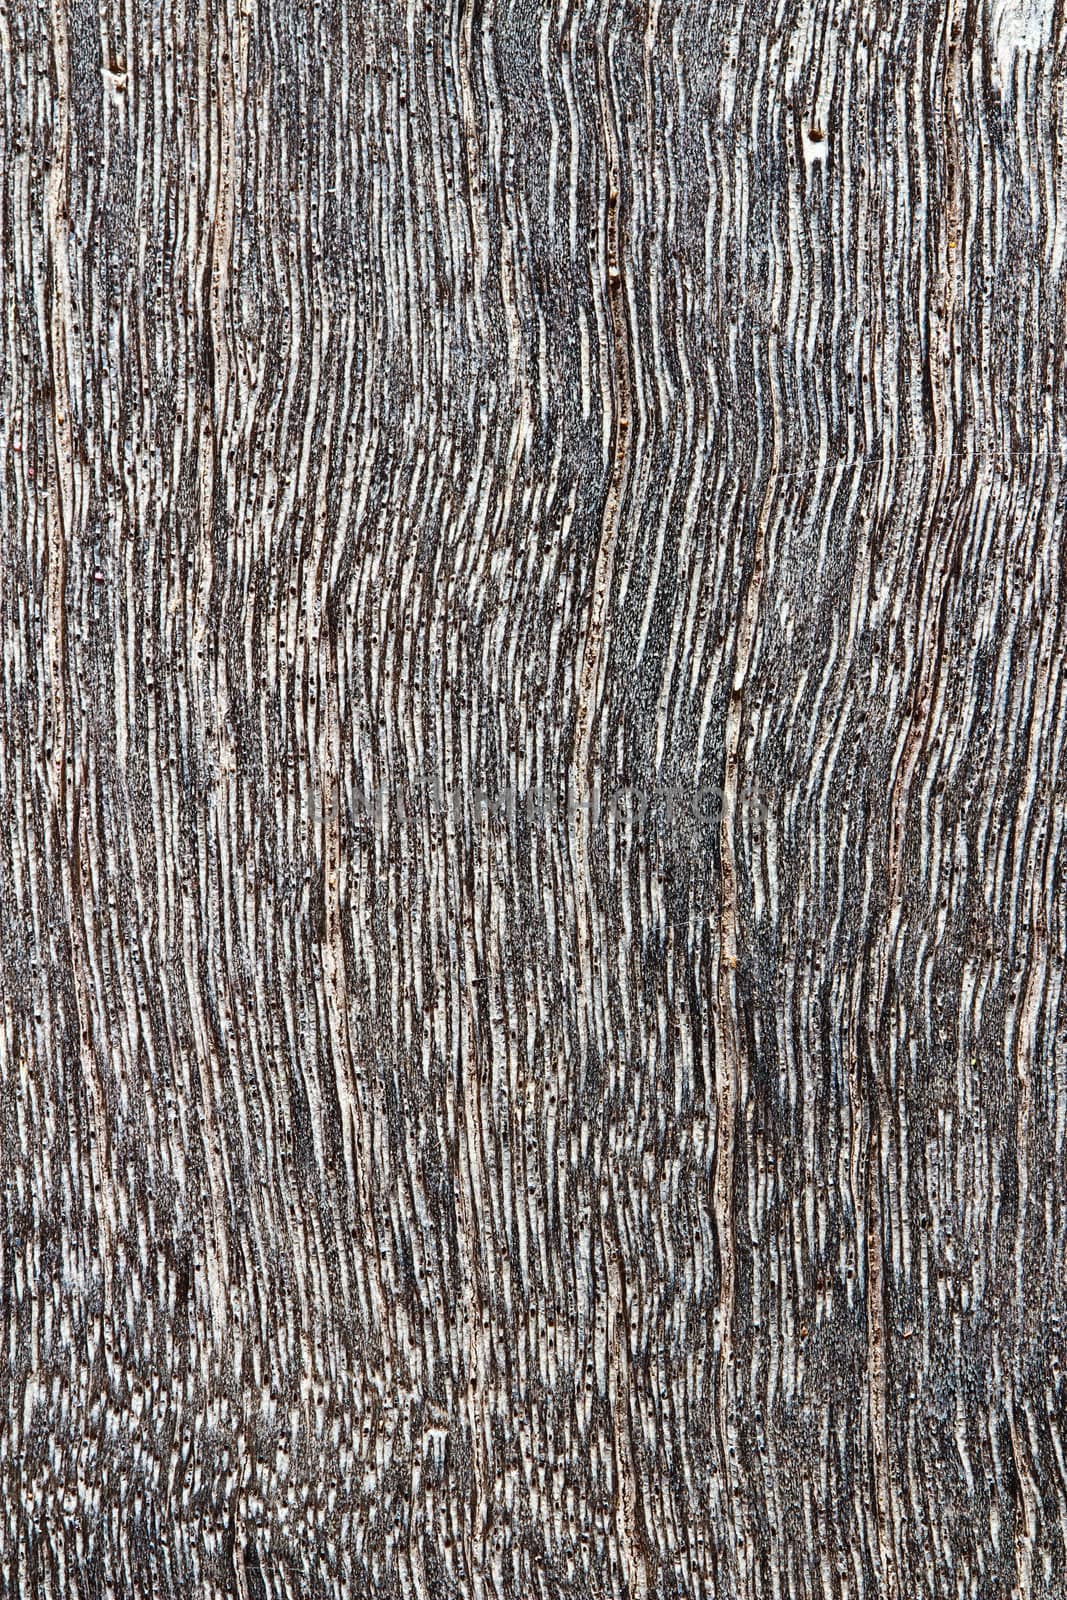 Wood texture , closes – up .